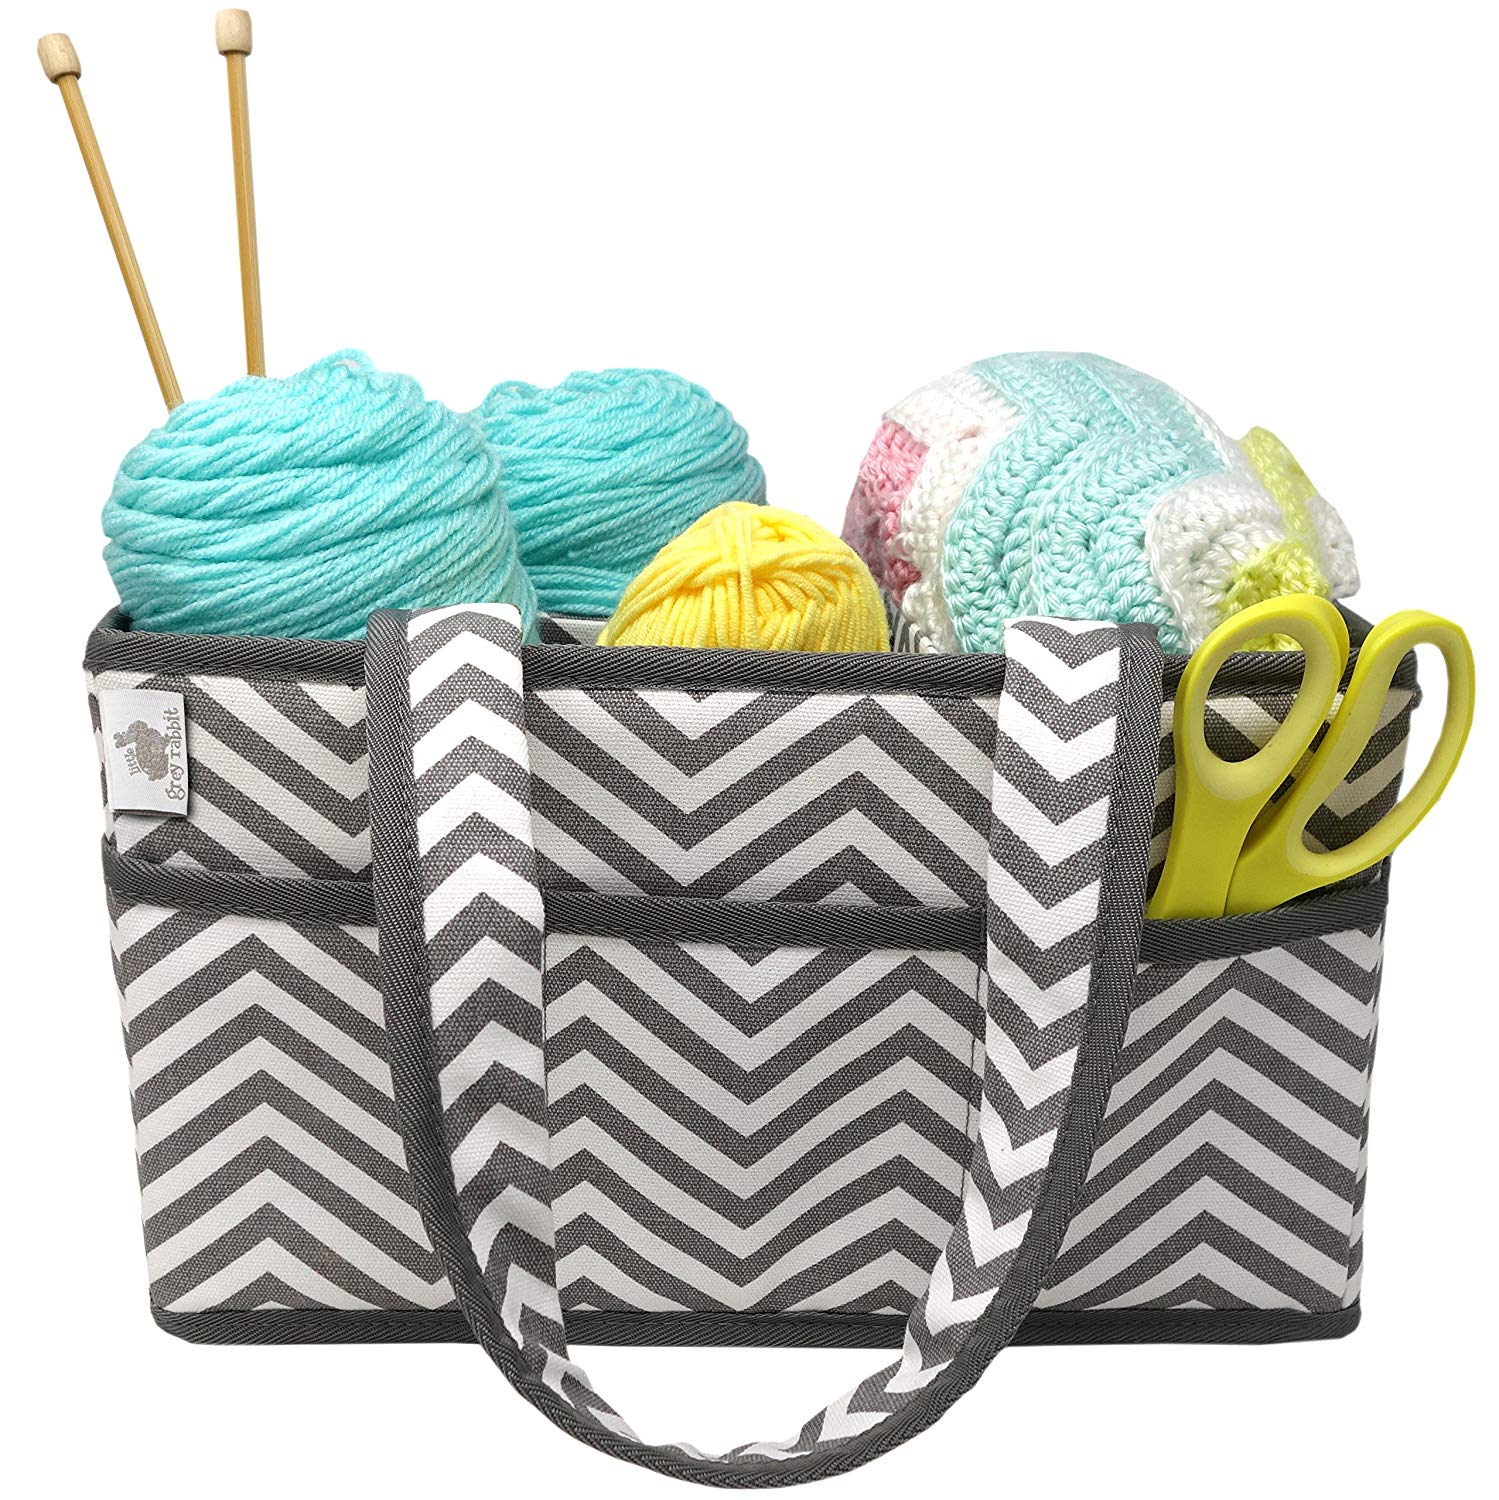 Bag for Knitting Wool Patterns Crafts Handmade